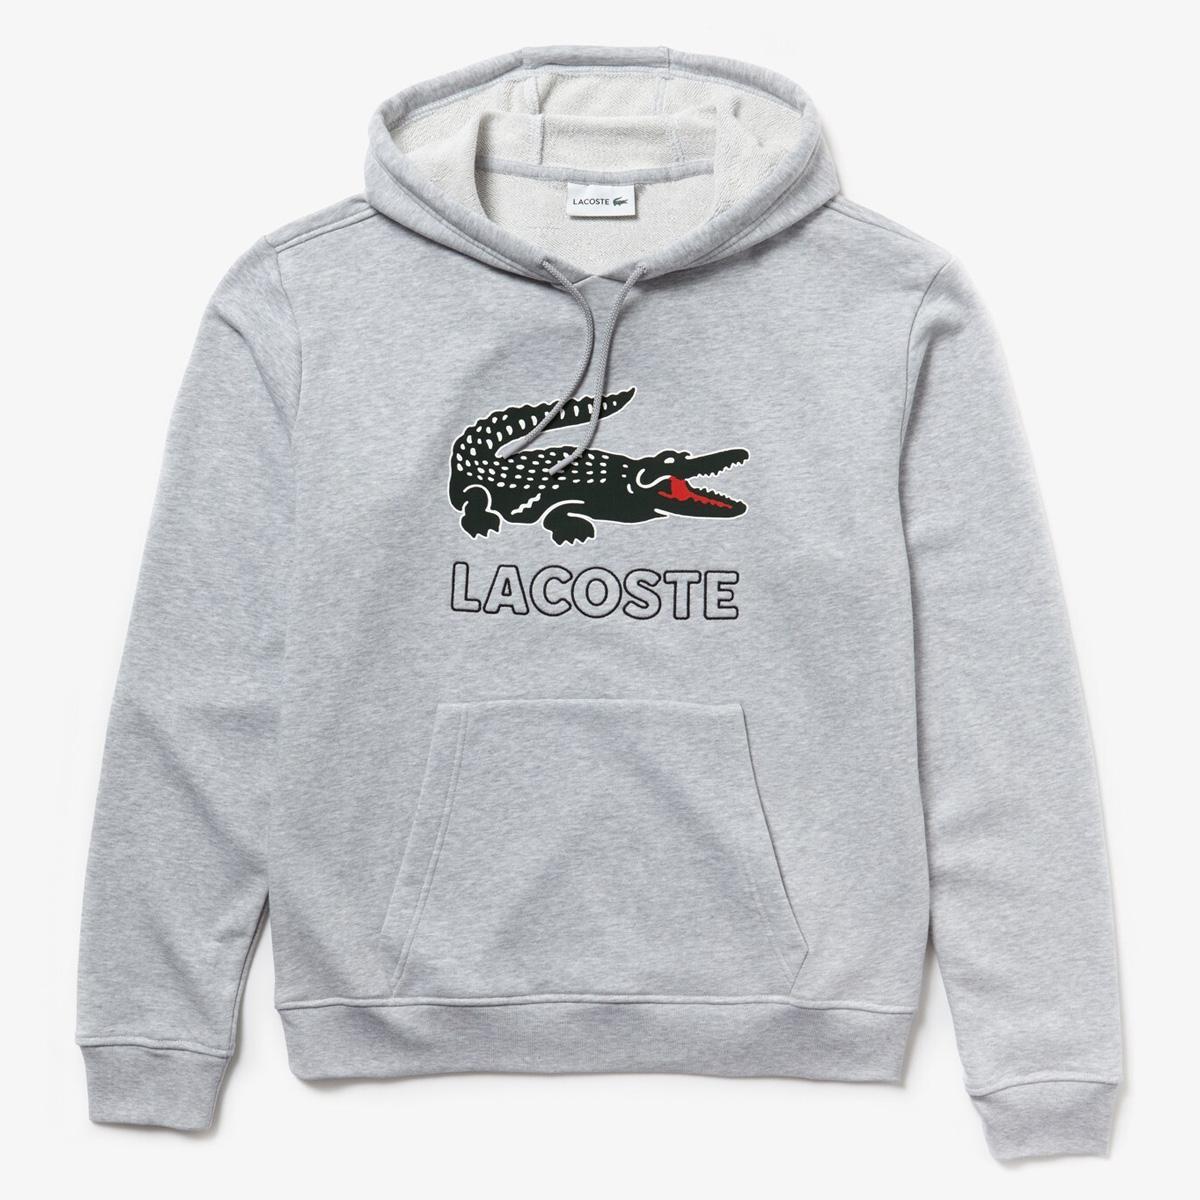 Lacoste Mens Croc Graphic Hoodie - Grey - Tennisnuts.com